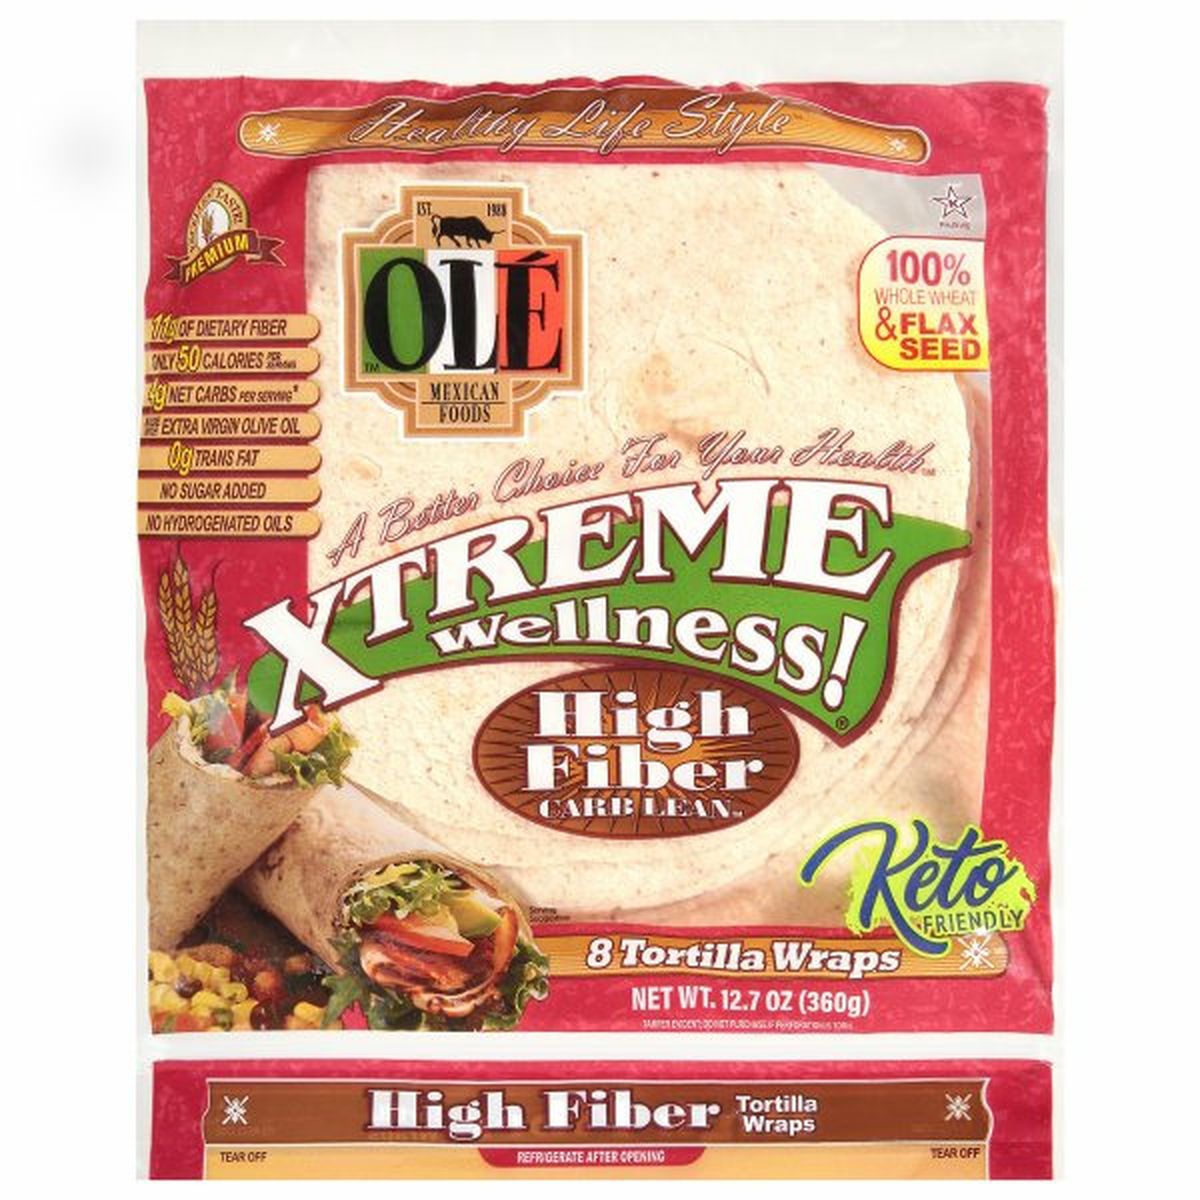 Calories in Ole Xtreme Wellness! Tortilla Wraps, High Fiber, Carb Lean